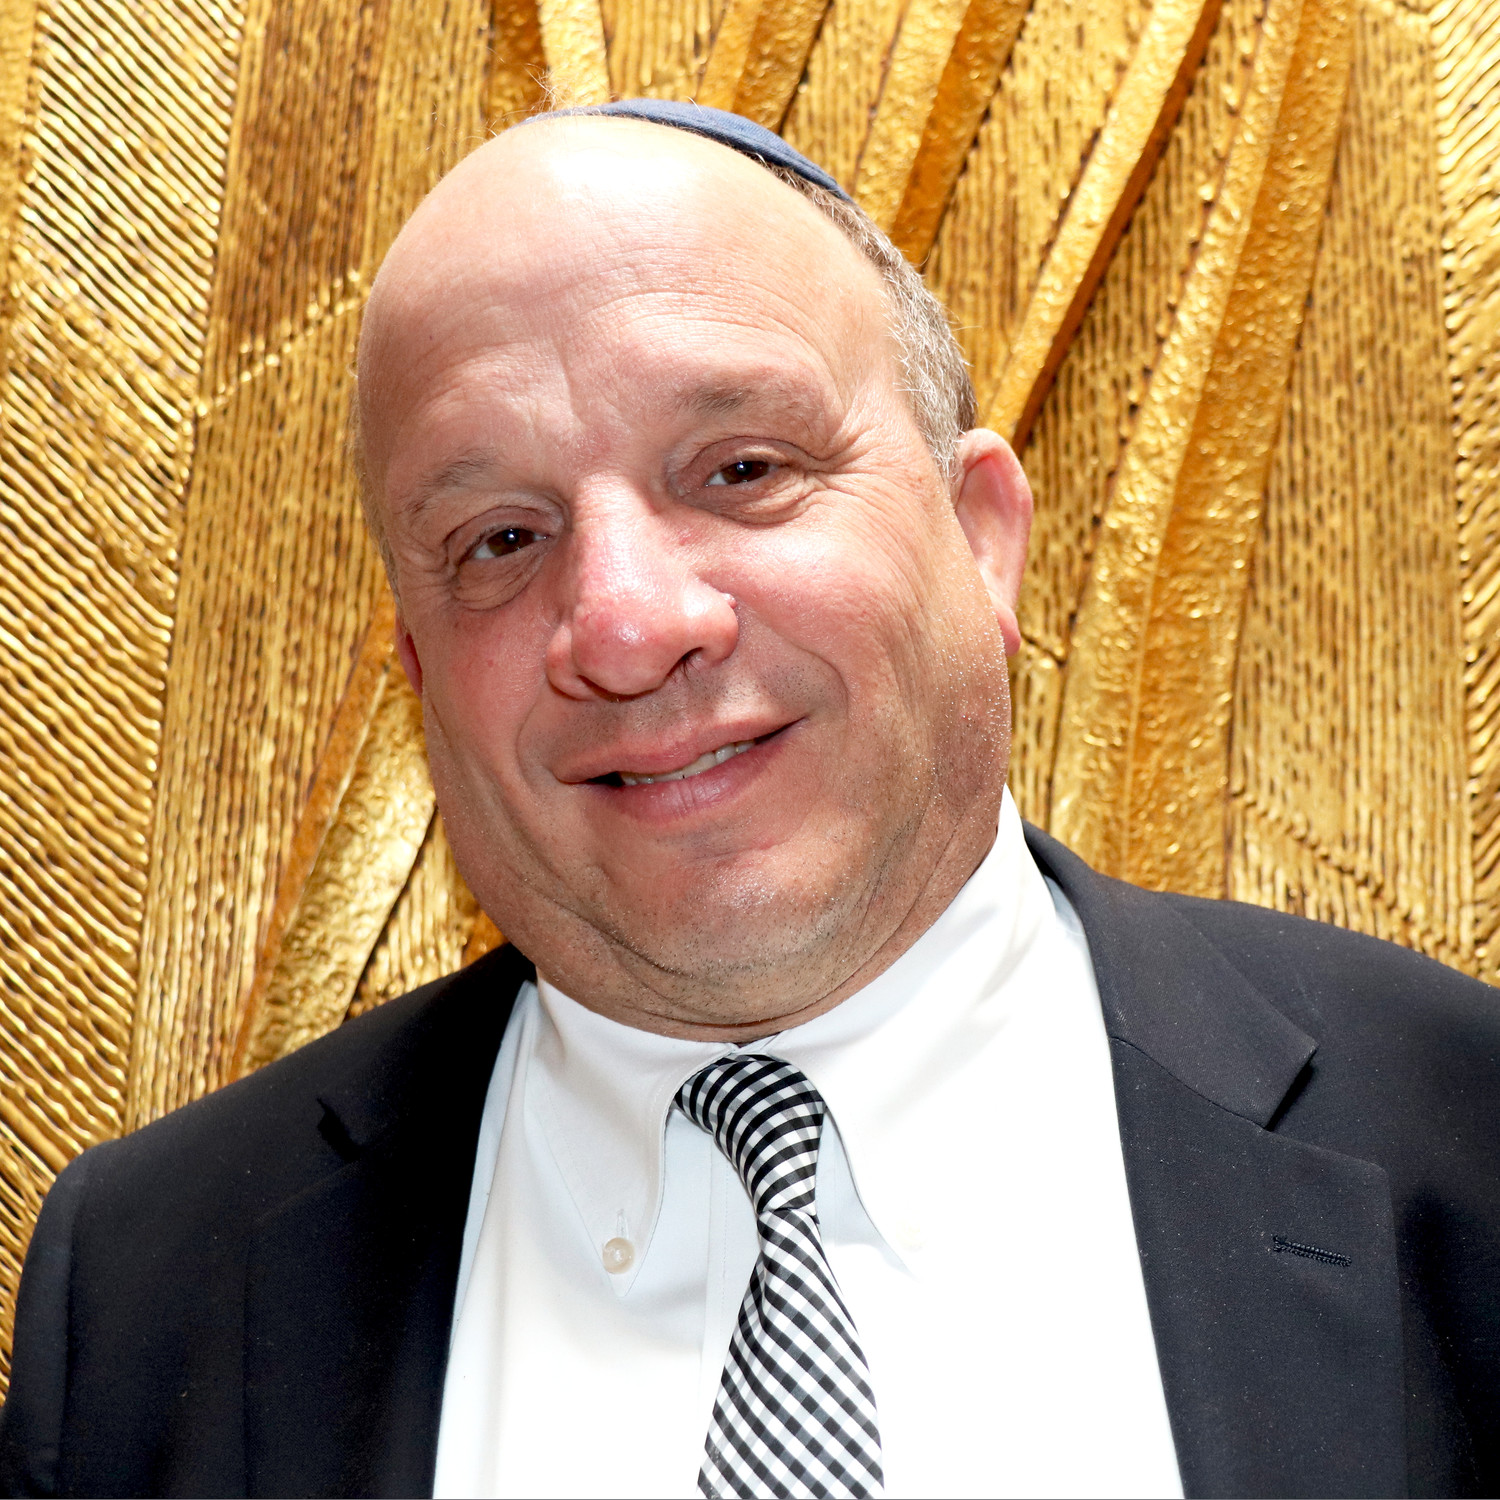 Rabbi Howard Diamond